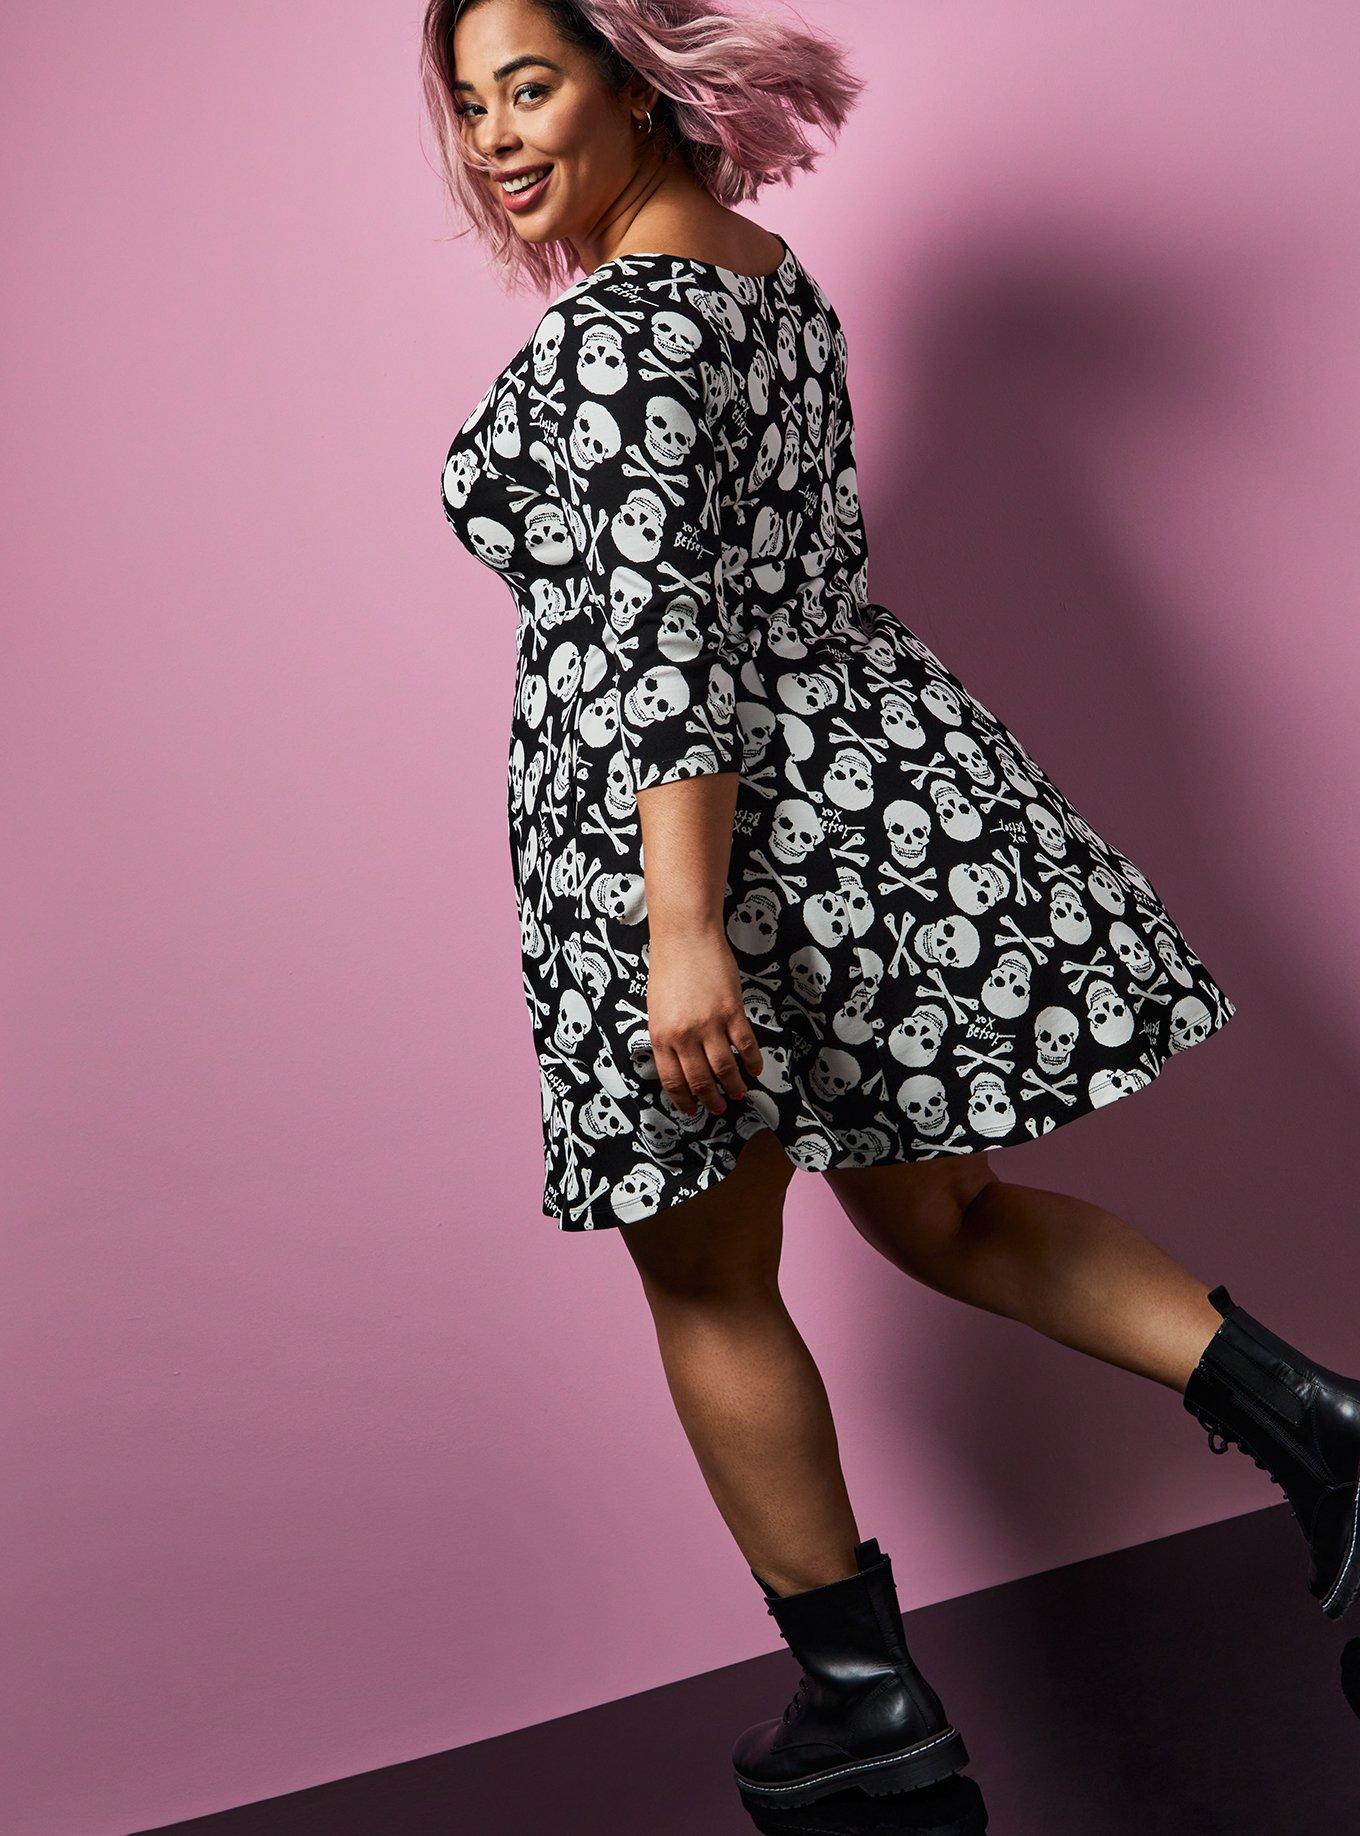 Torrid 4x Betsey Johnson Midi Supersoft Print Mix Dress Plus Size 4 